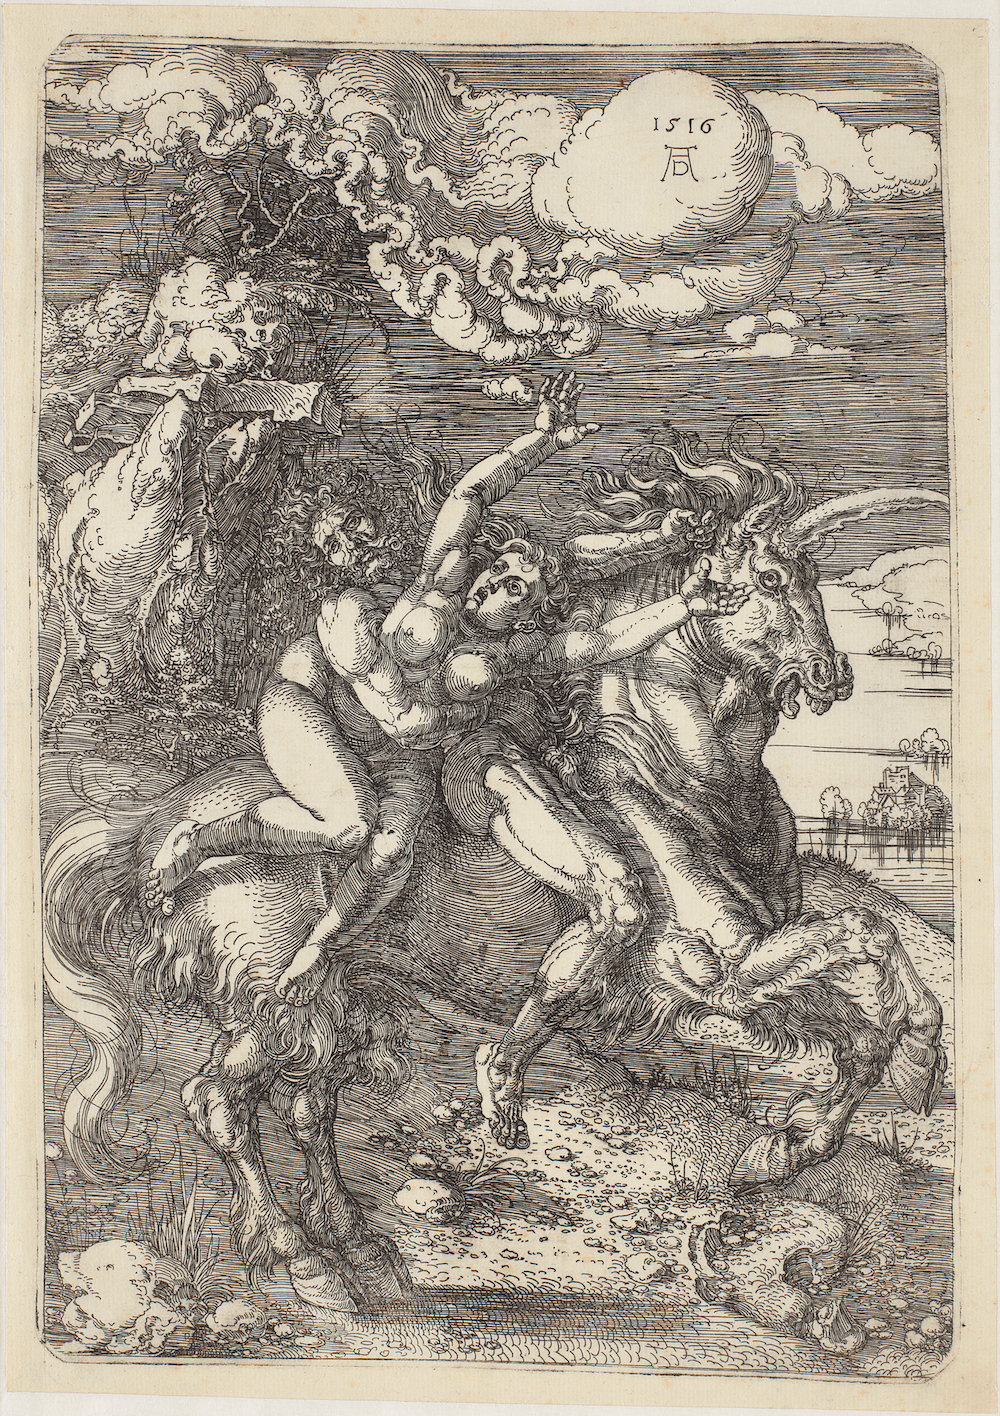 Răpire pe un Unicorn by Albrecht Dürer - 1516 - 393 x 230 mm 